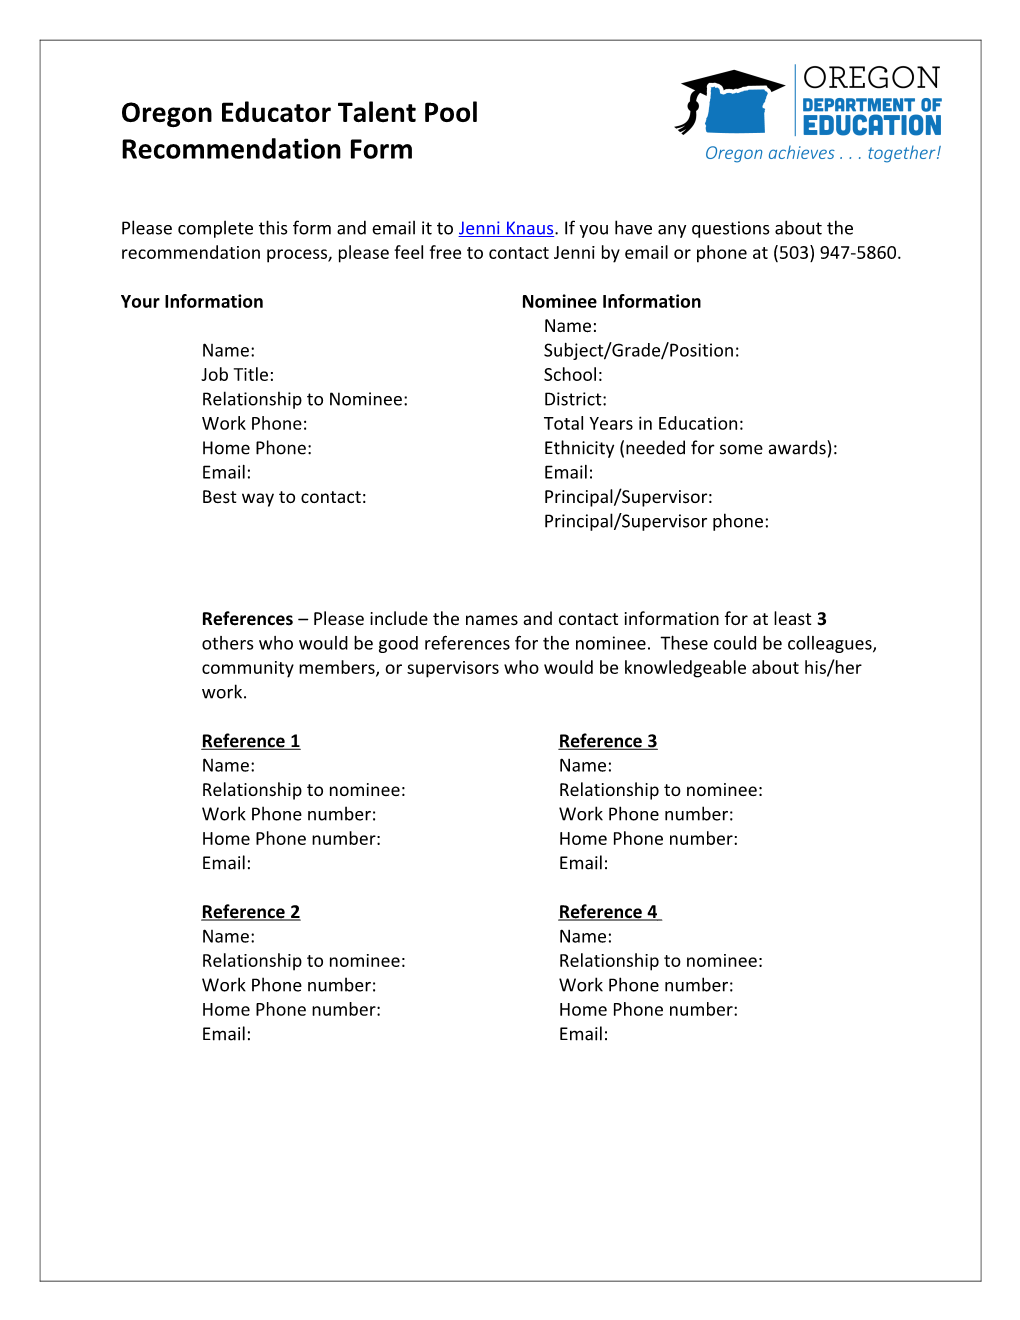 Oregon Educator Talent Pool Recommendation Form